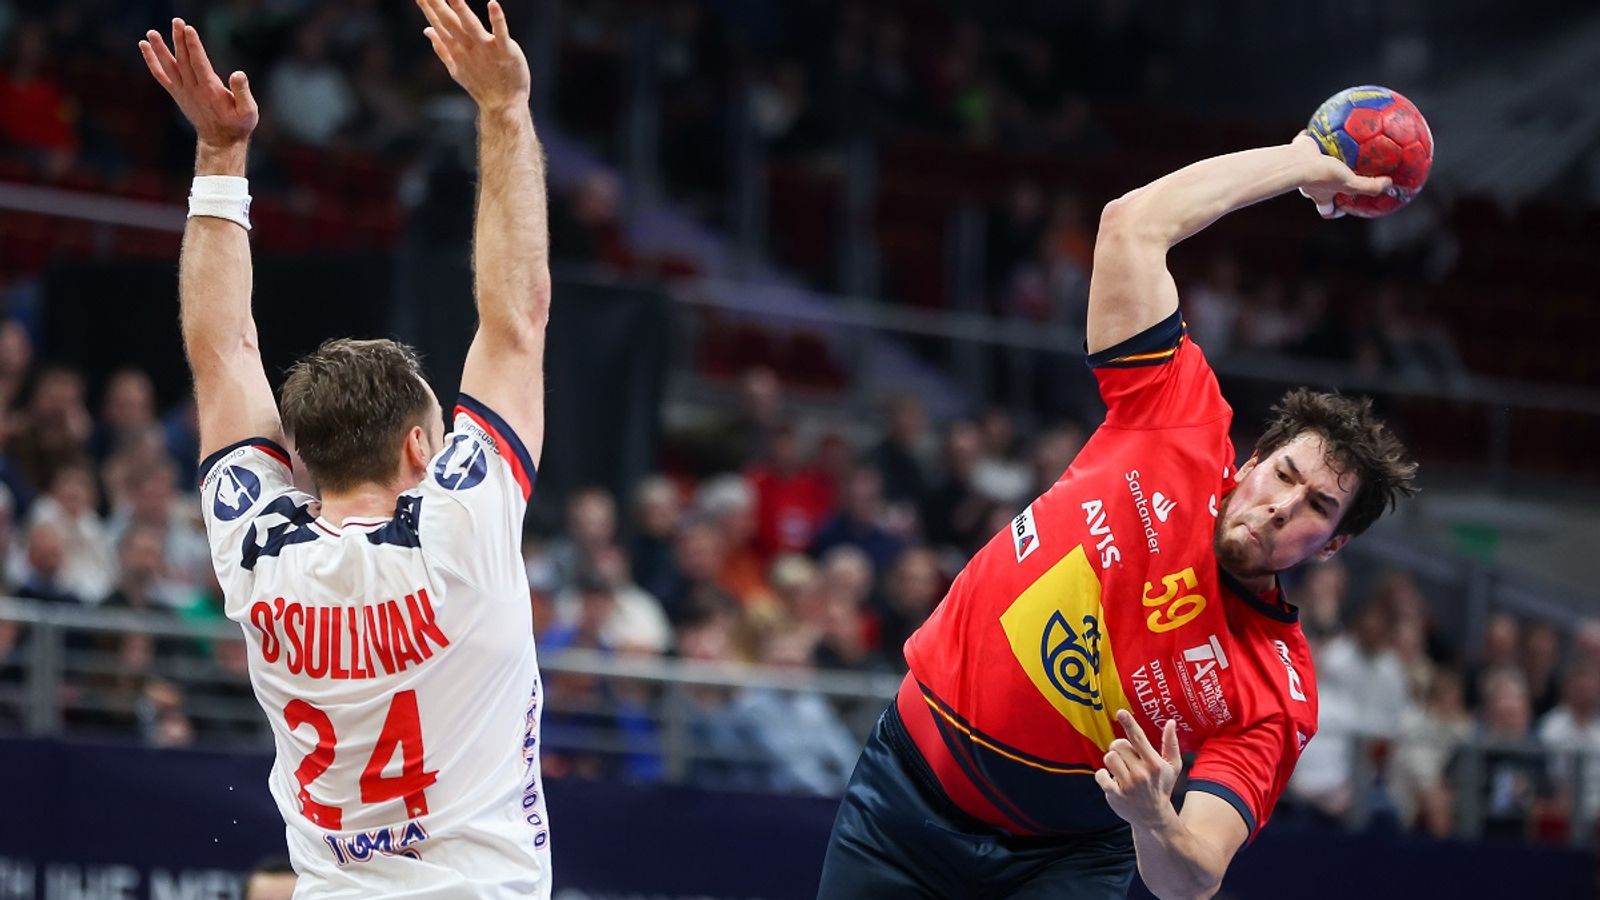 Handball-WM WM-Thriller! Spanien schlägt Norwegen nach doppelter Verlängerung Handball News Sky Sport